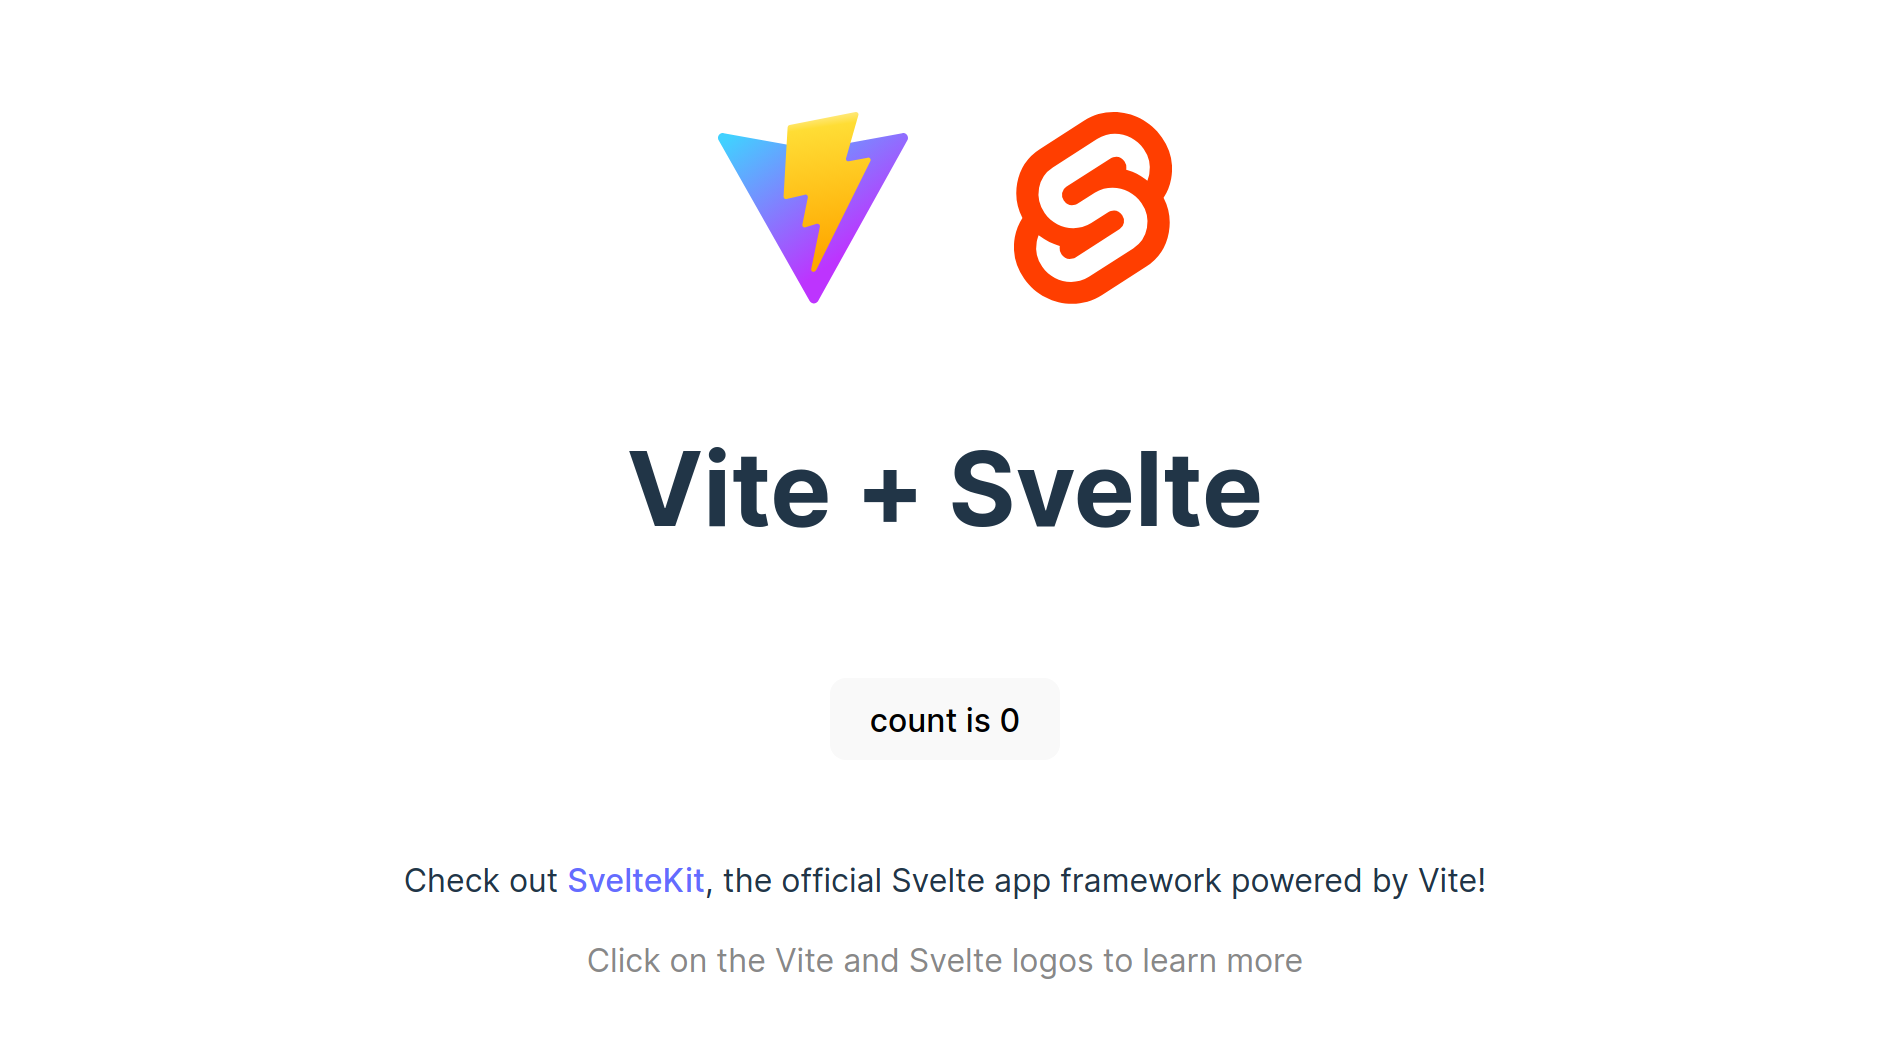 Vite + Svelte app